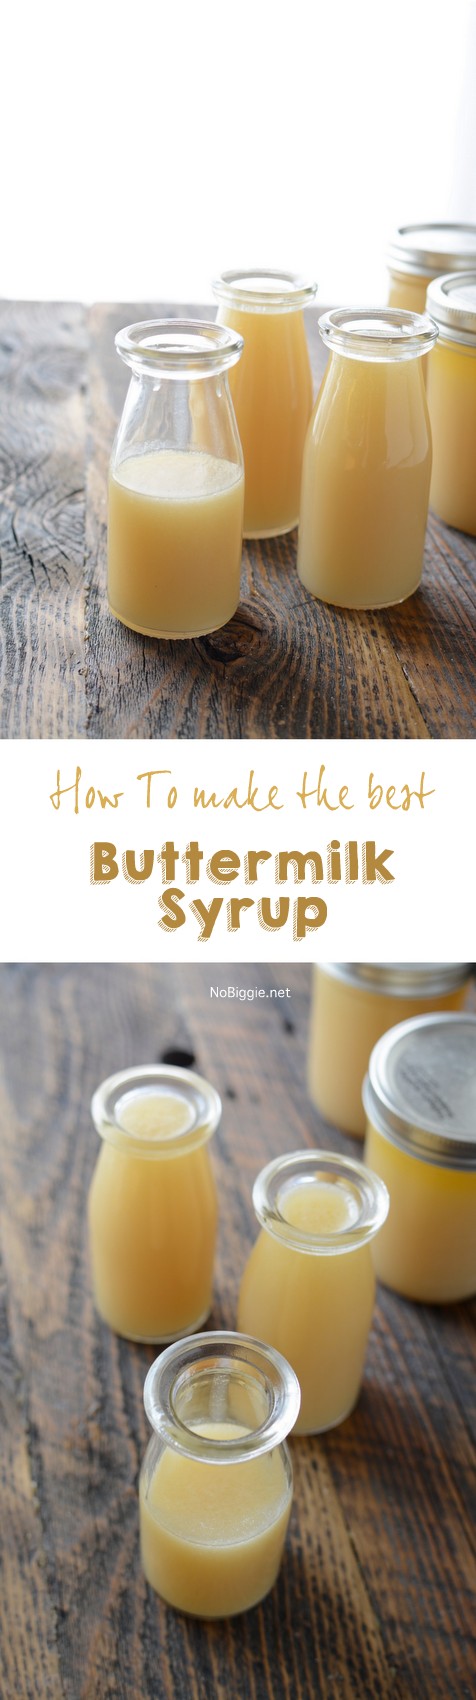 http://www.nobiggie.net/wp-content/uploads/2009/12/how-to-make-the-best-buttermilk-syrup-NoBiggie.net_.jpg